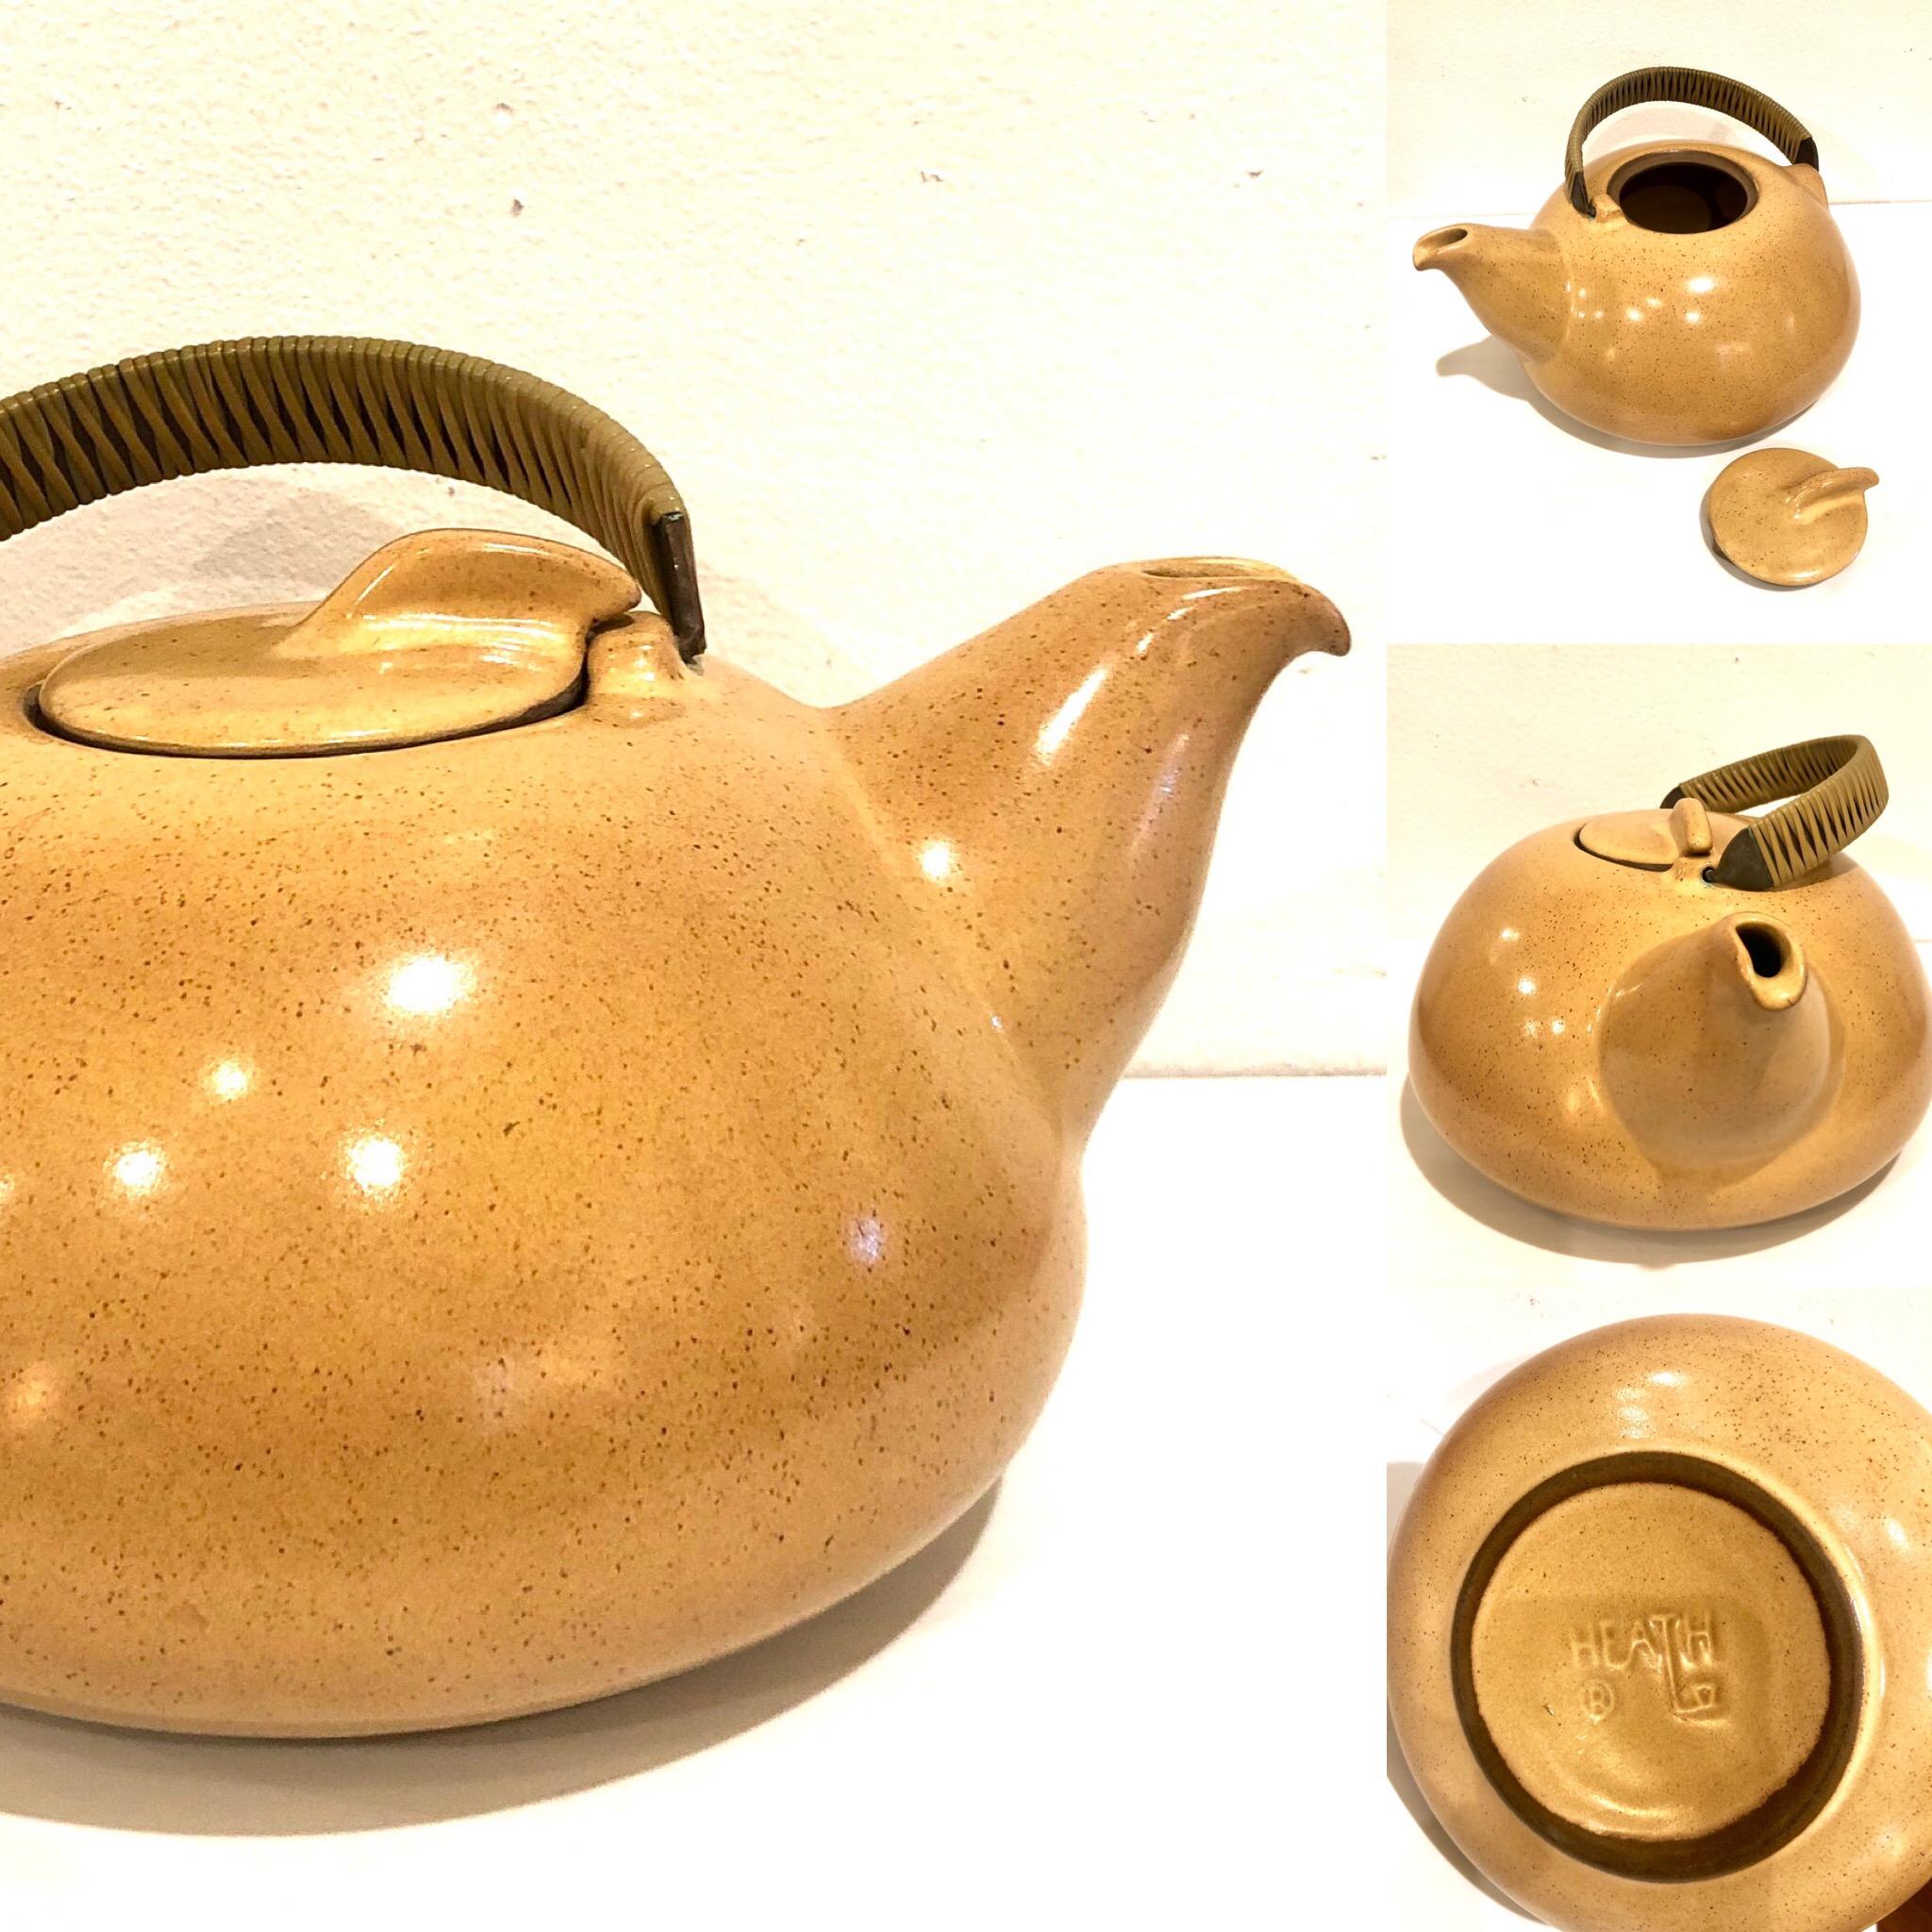 American Mid-Century Modern Rare Teapot by Heath Ceramics California Design